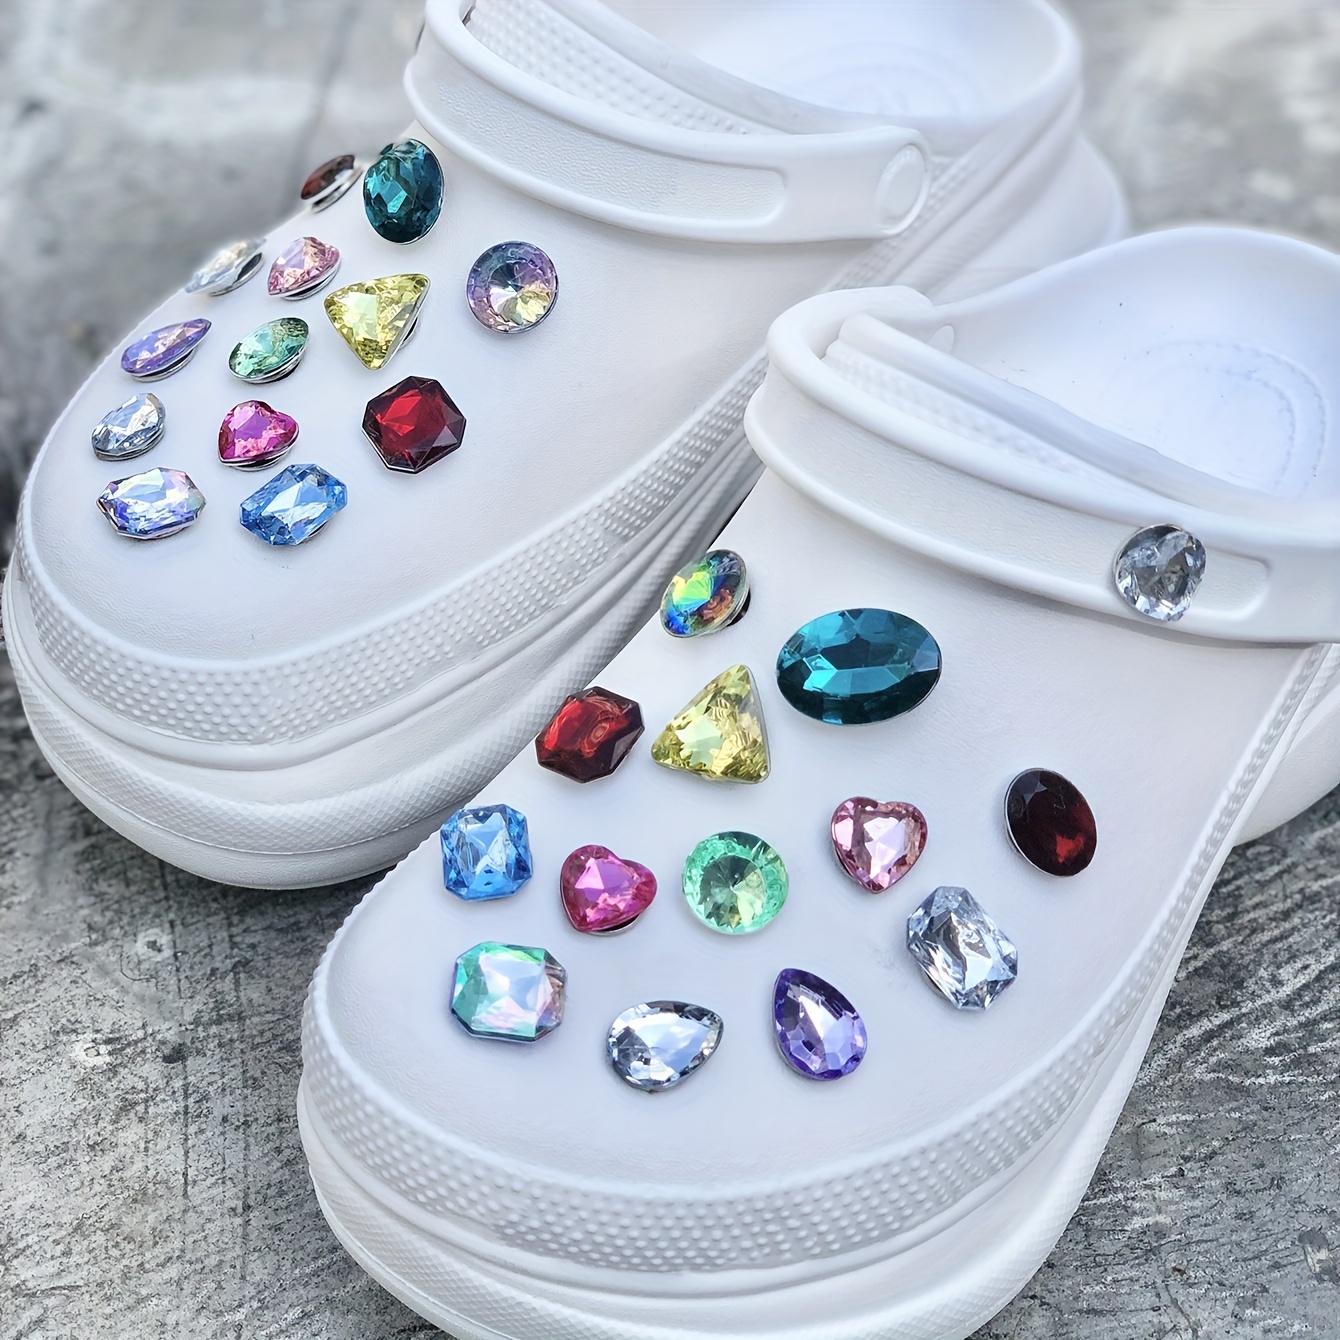 28 Pcs Bling Croc Charms Crystal Shoe Decoration Charms Jewelry Shoe Decoration Rhinestone Metal Charms Fits Clog Sandals Fashion Charm Hole Shoes